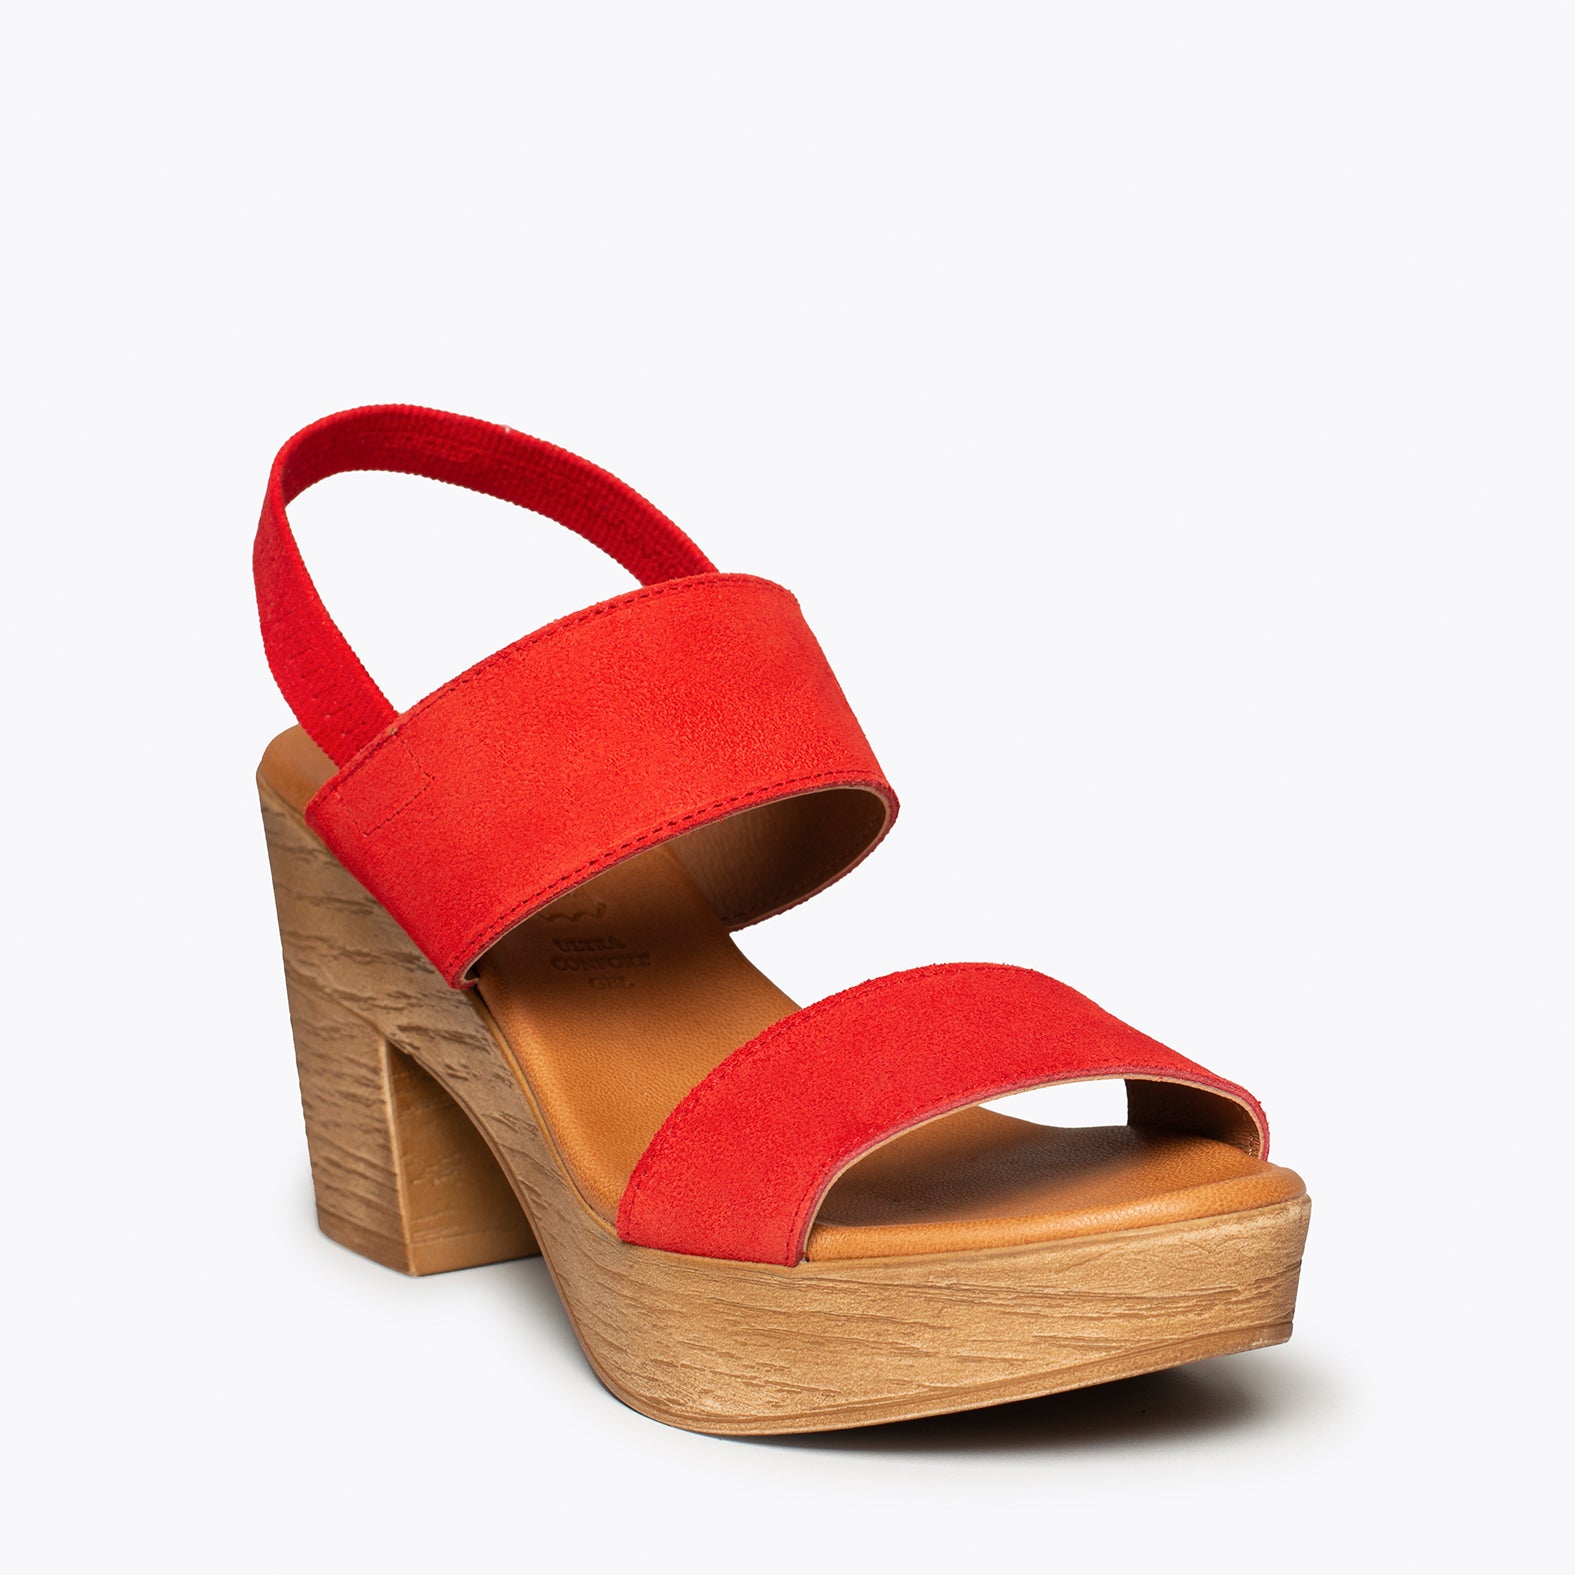 PLATFORM – RED platform sandals with straps